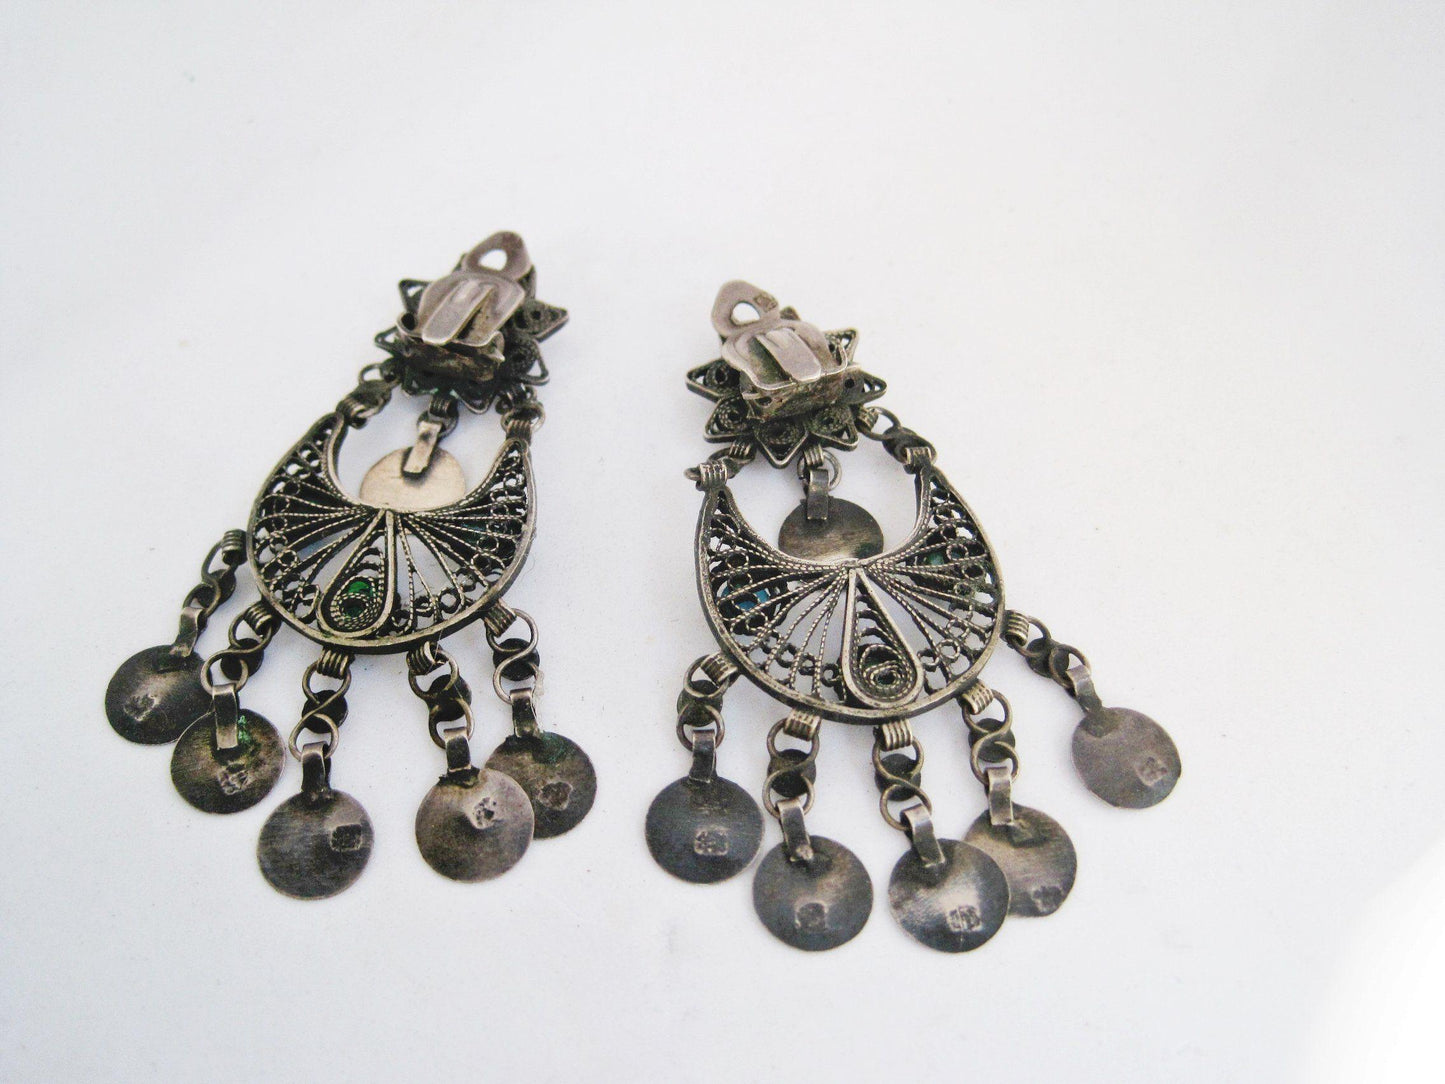 silver filigree earrings from Egypt